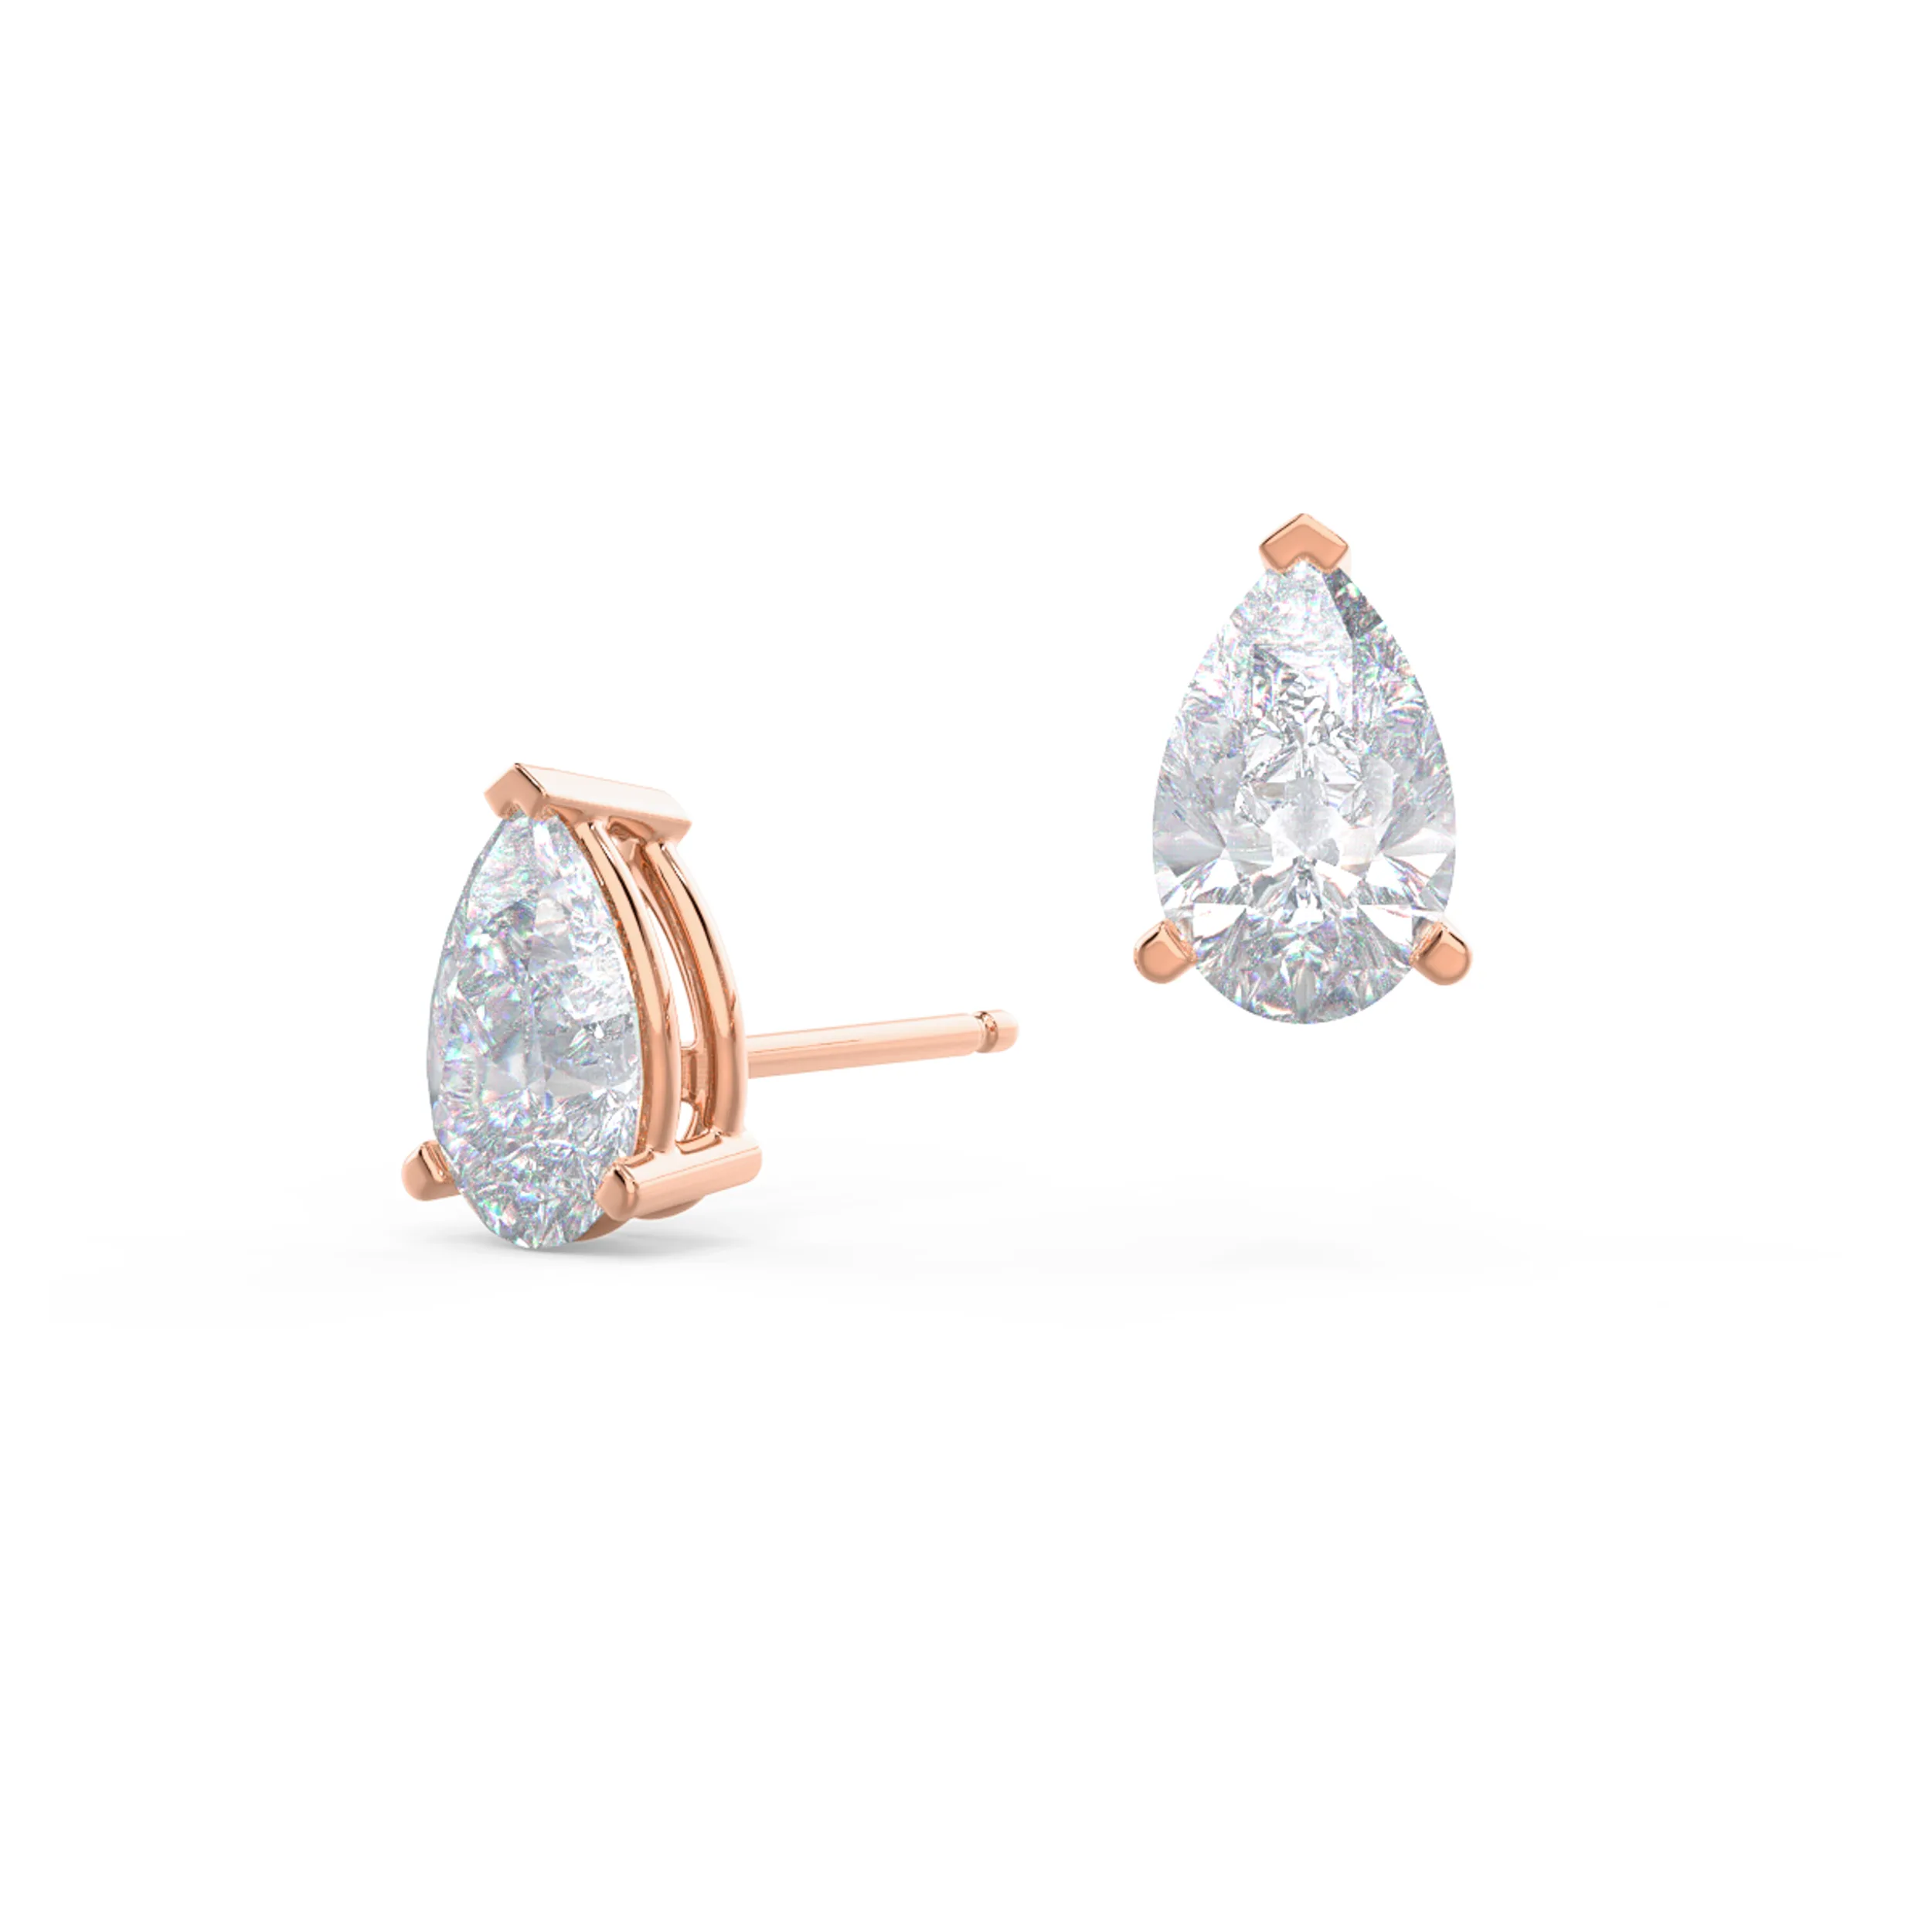 1.4 ct Lab Diamonds set in 14 Karat Rose Gold Pear Stud Earrings (Main View)